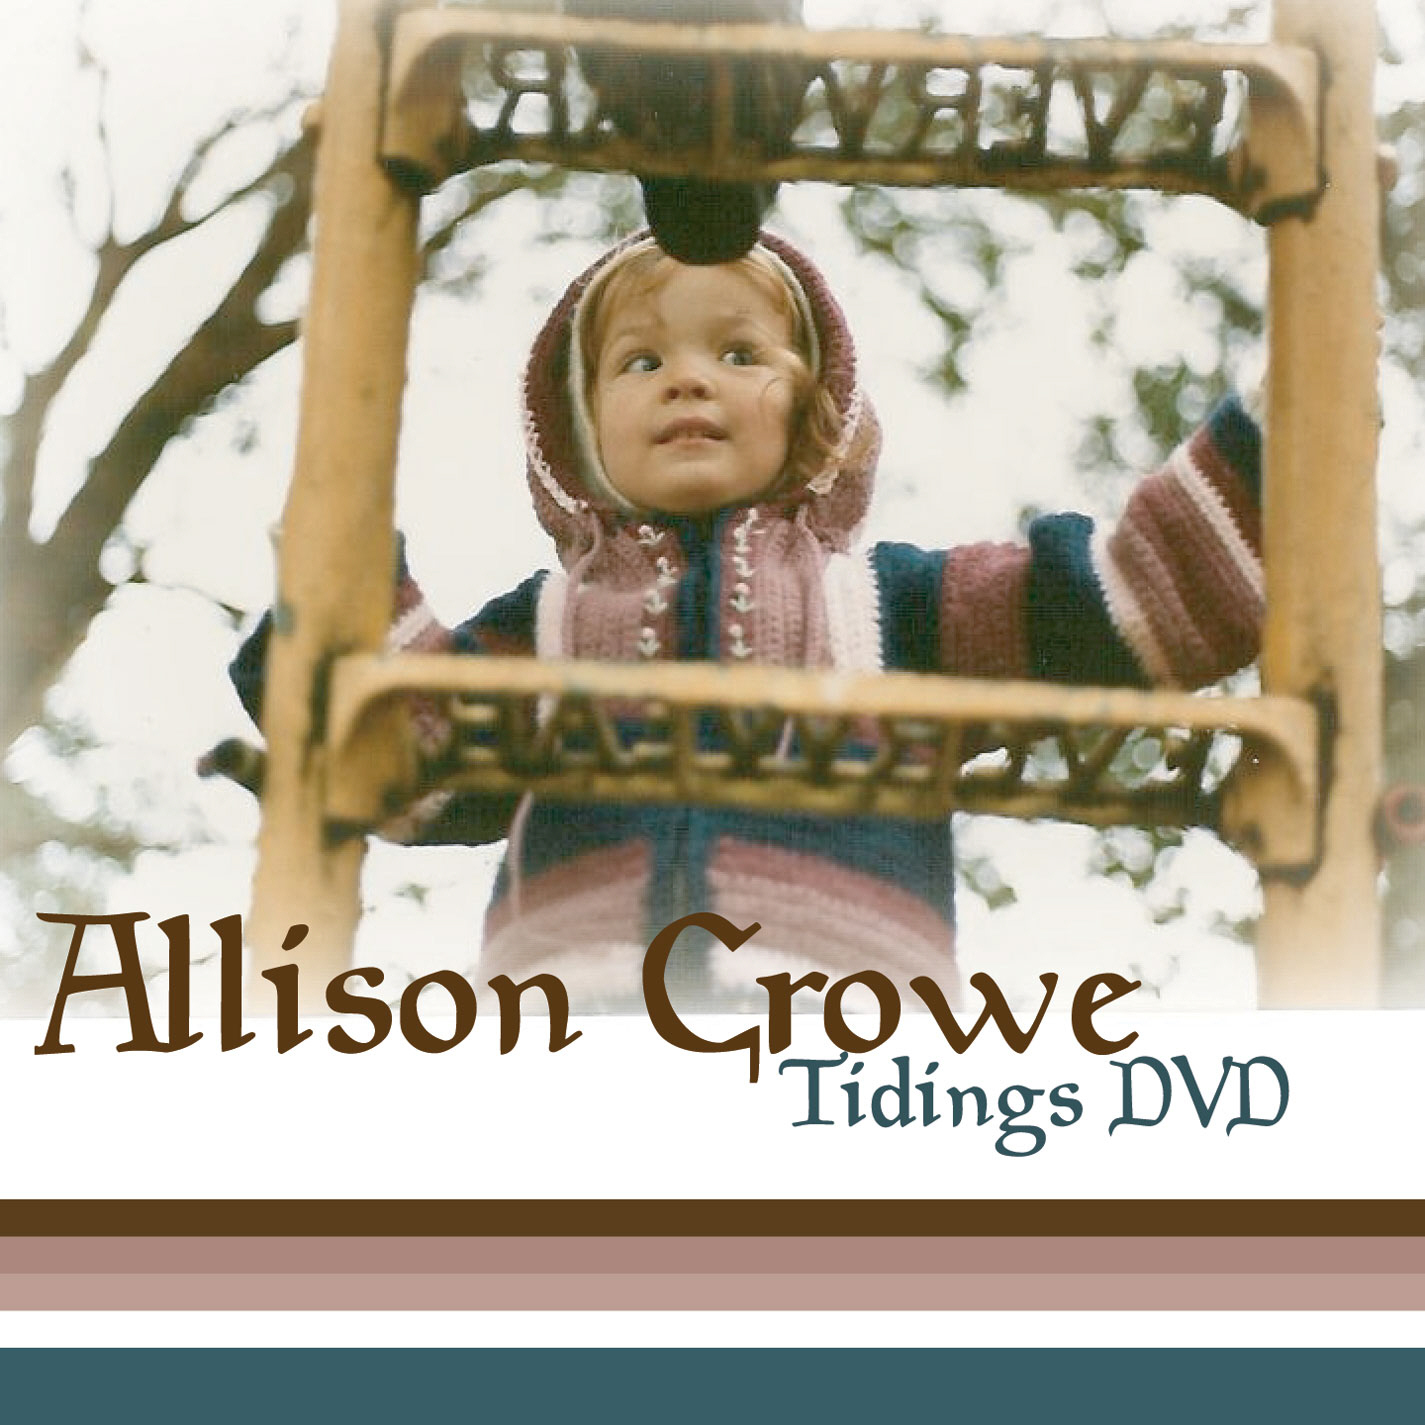 Allison Crowe Tidings DVD cover art